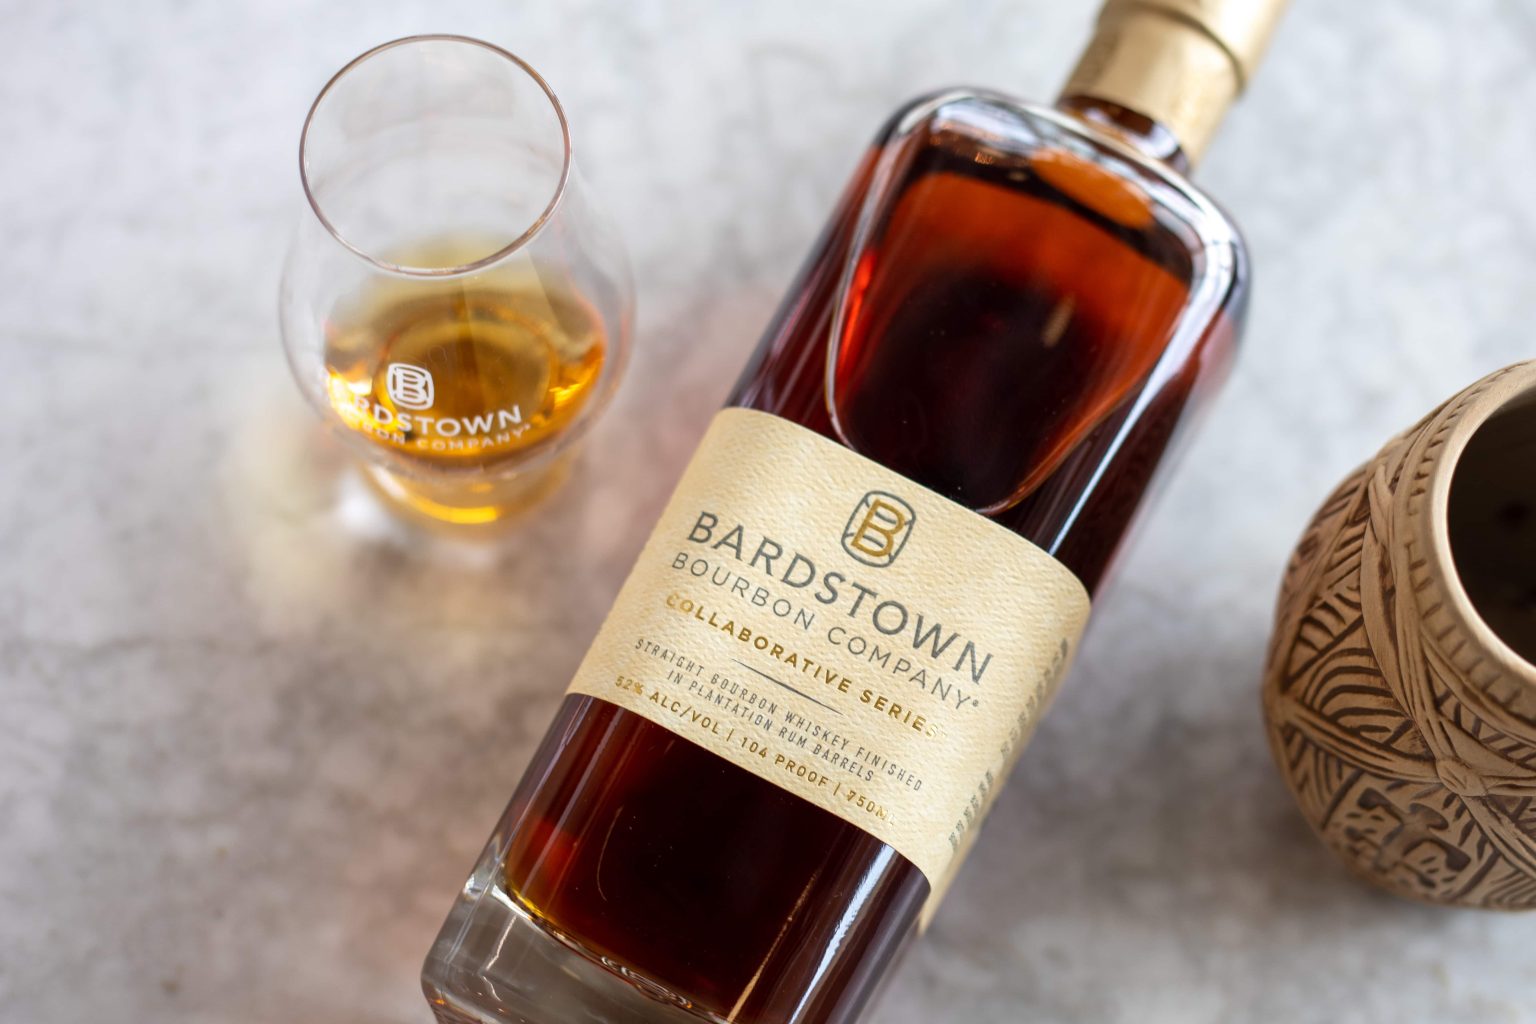 Bardstown Plantation Rum Finish bourbon